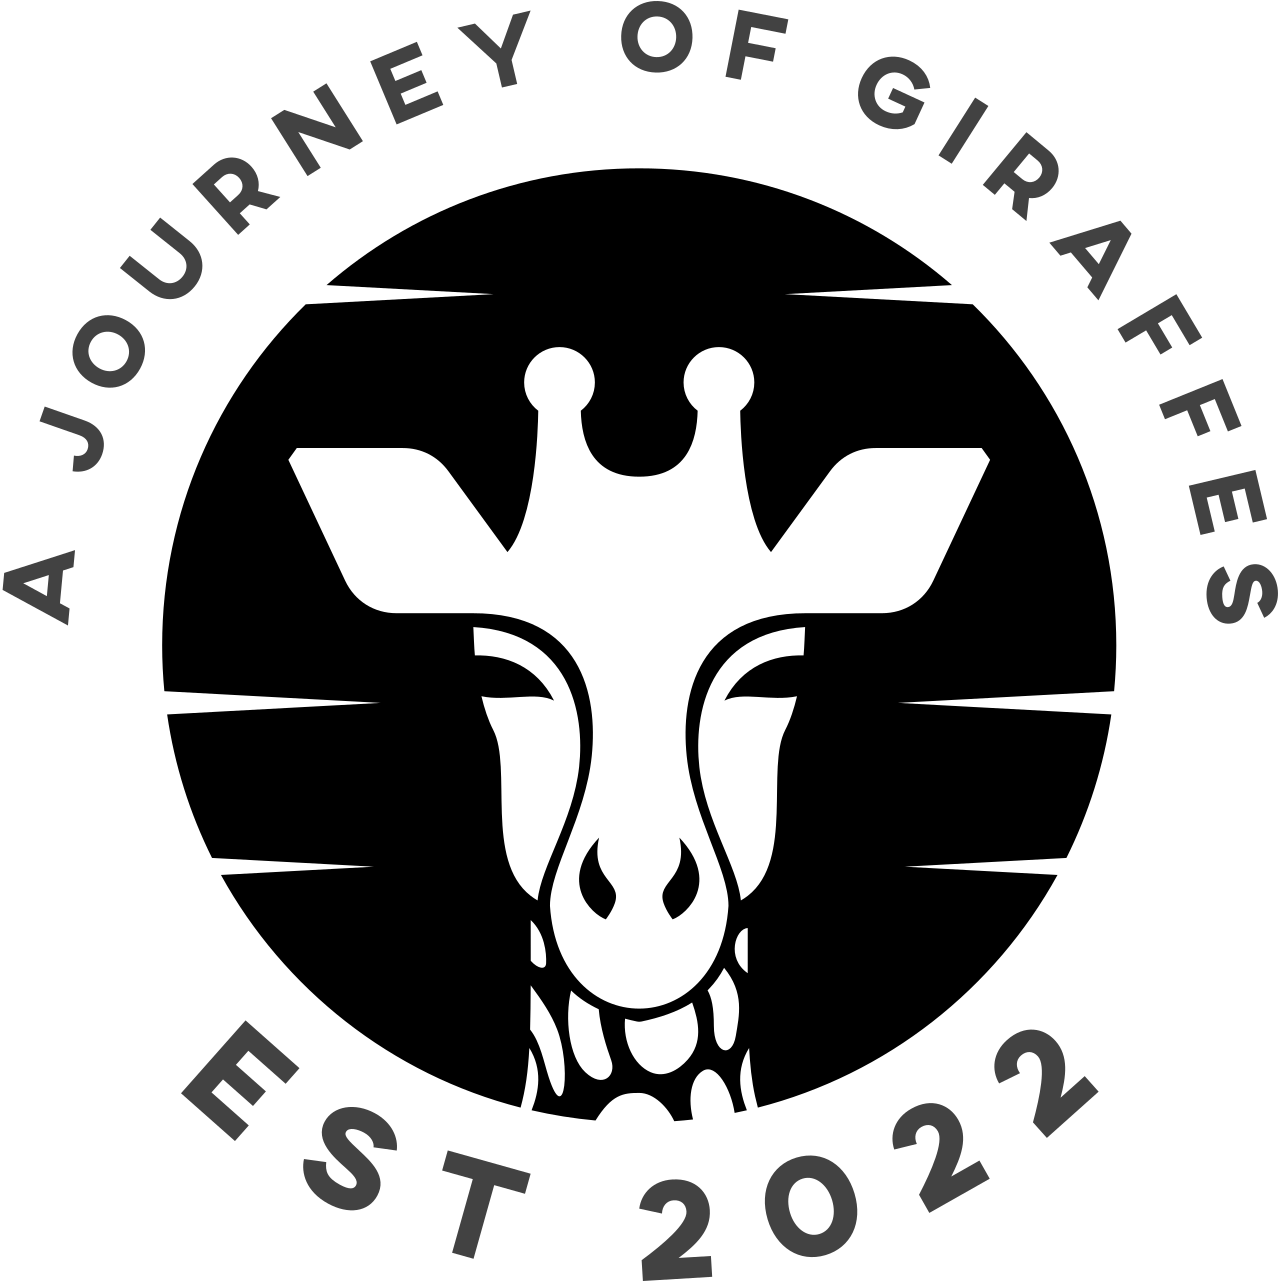 A Journey Of Giraffes's logo